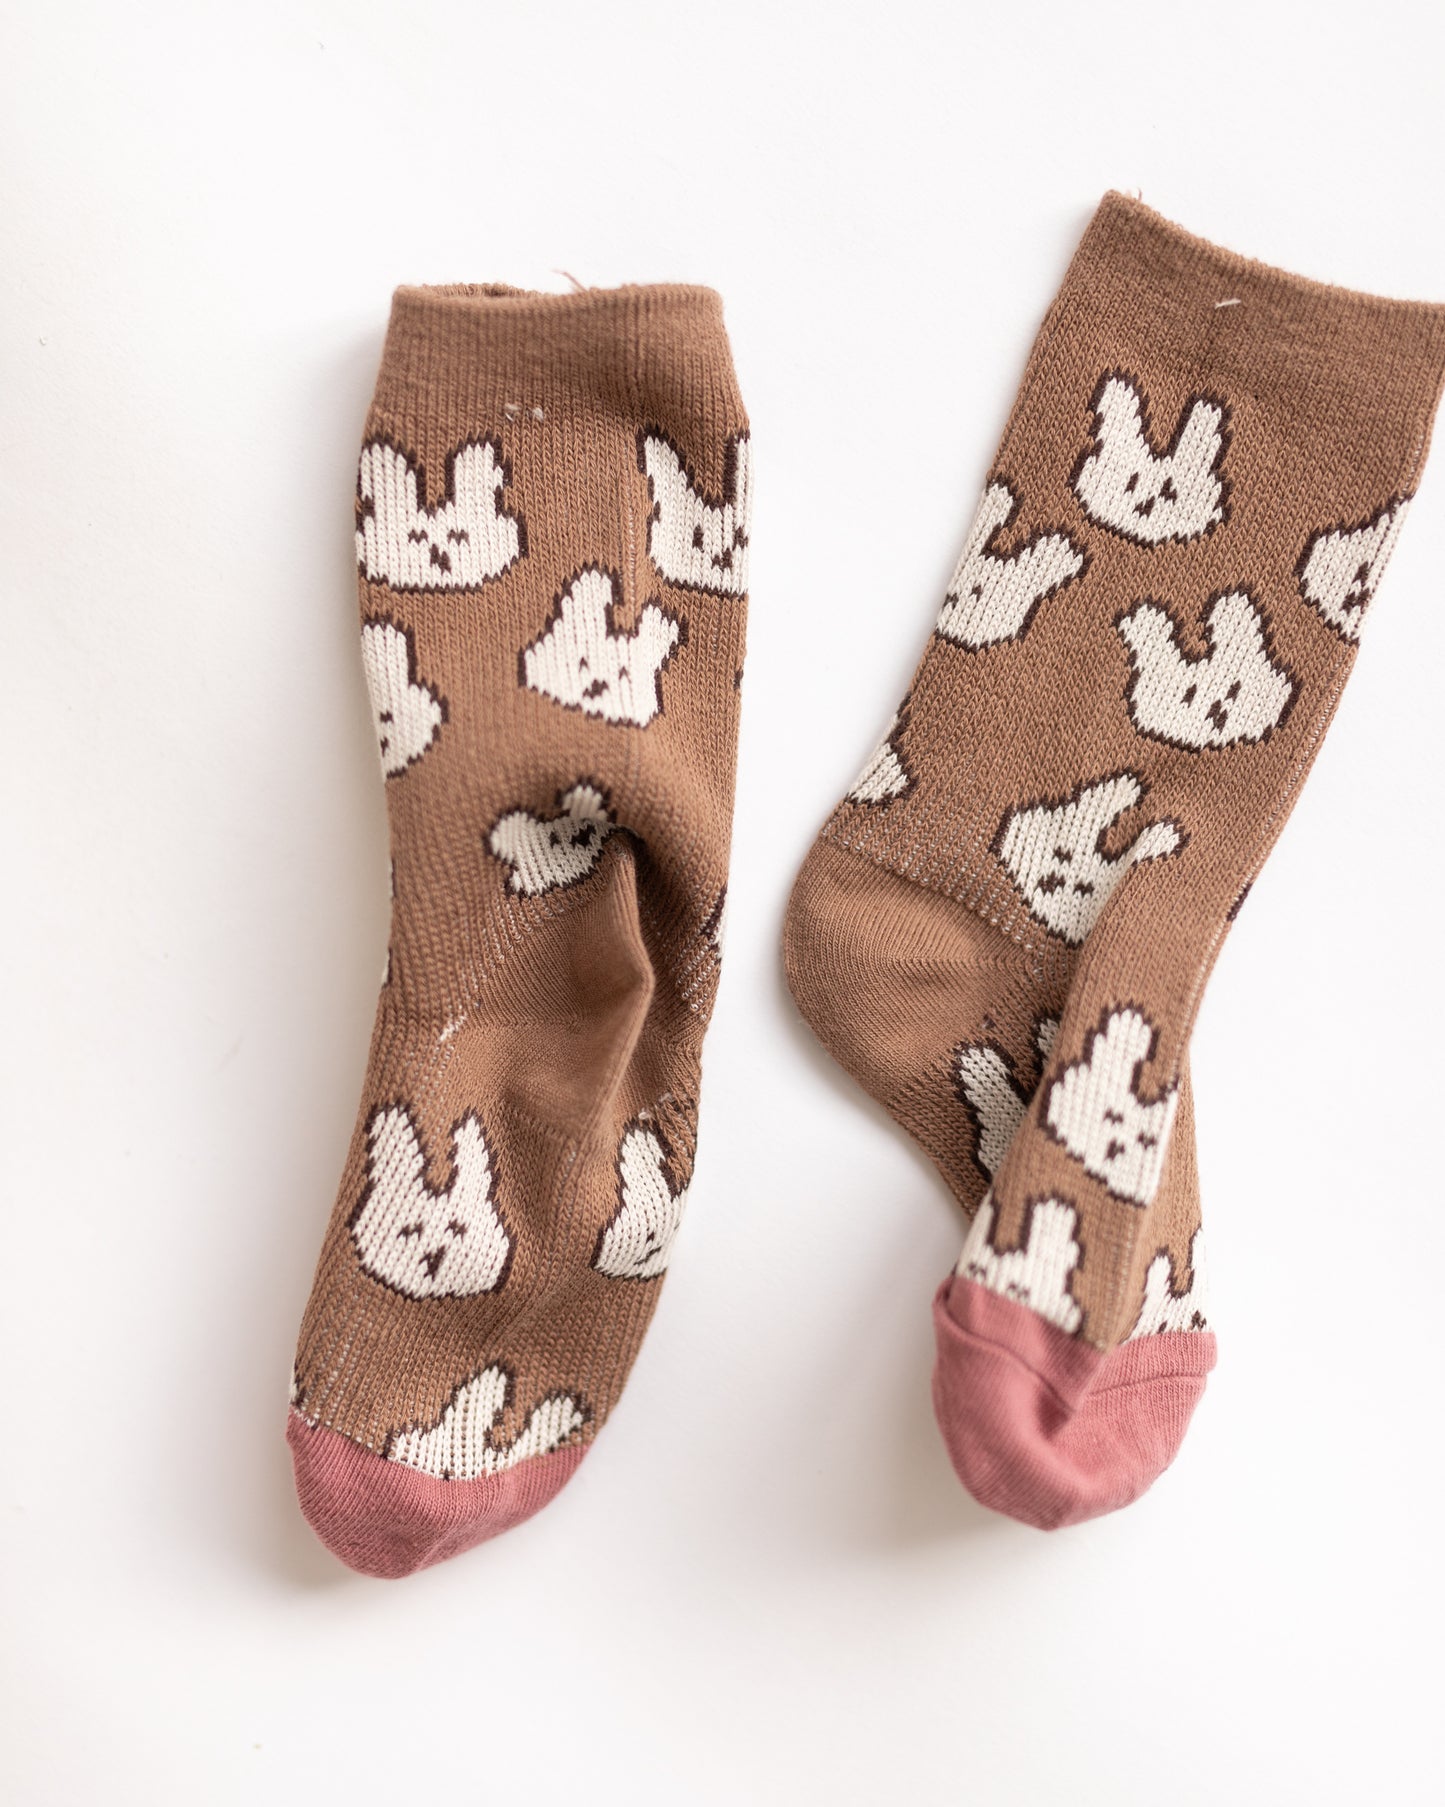 bunny socks